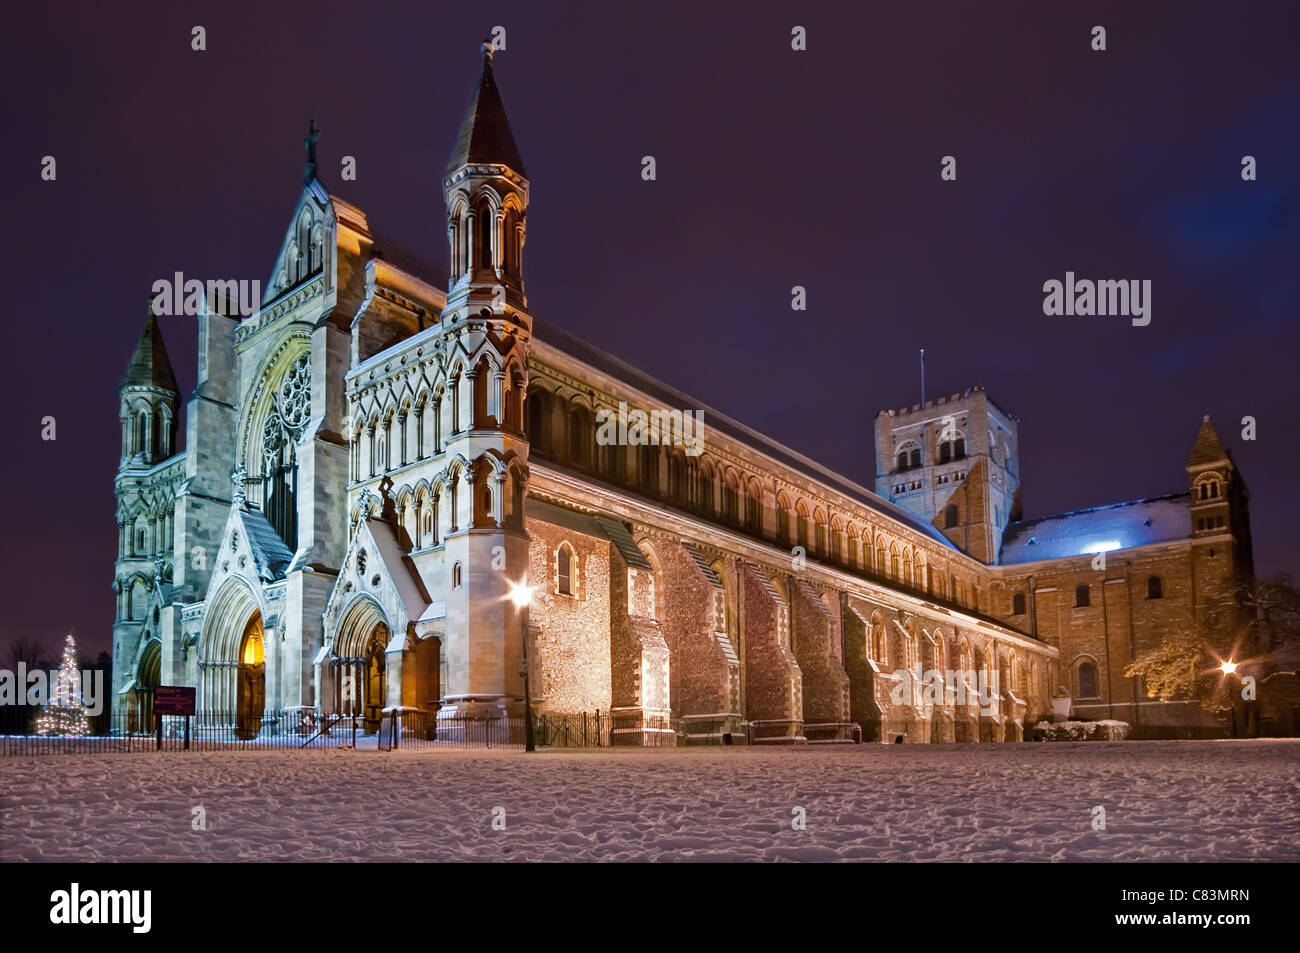 St Albans Abbey, nella neve a Natale, St Albans, Hertfordshire Foto Stock